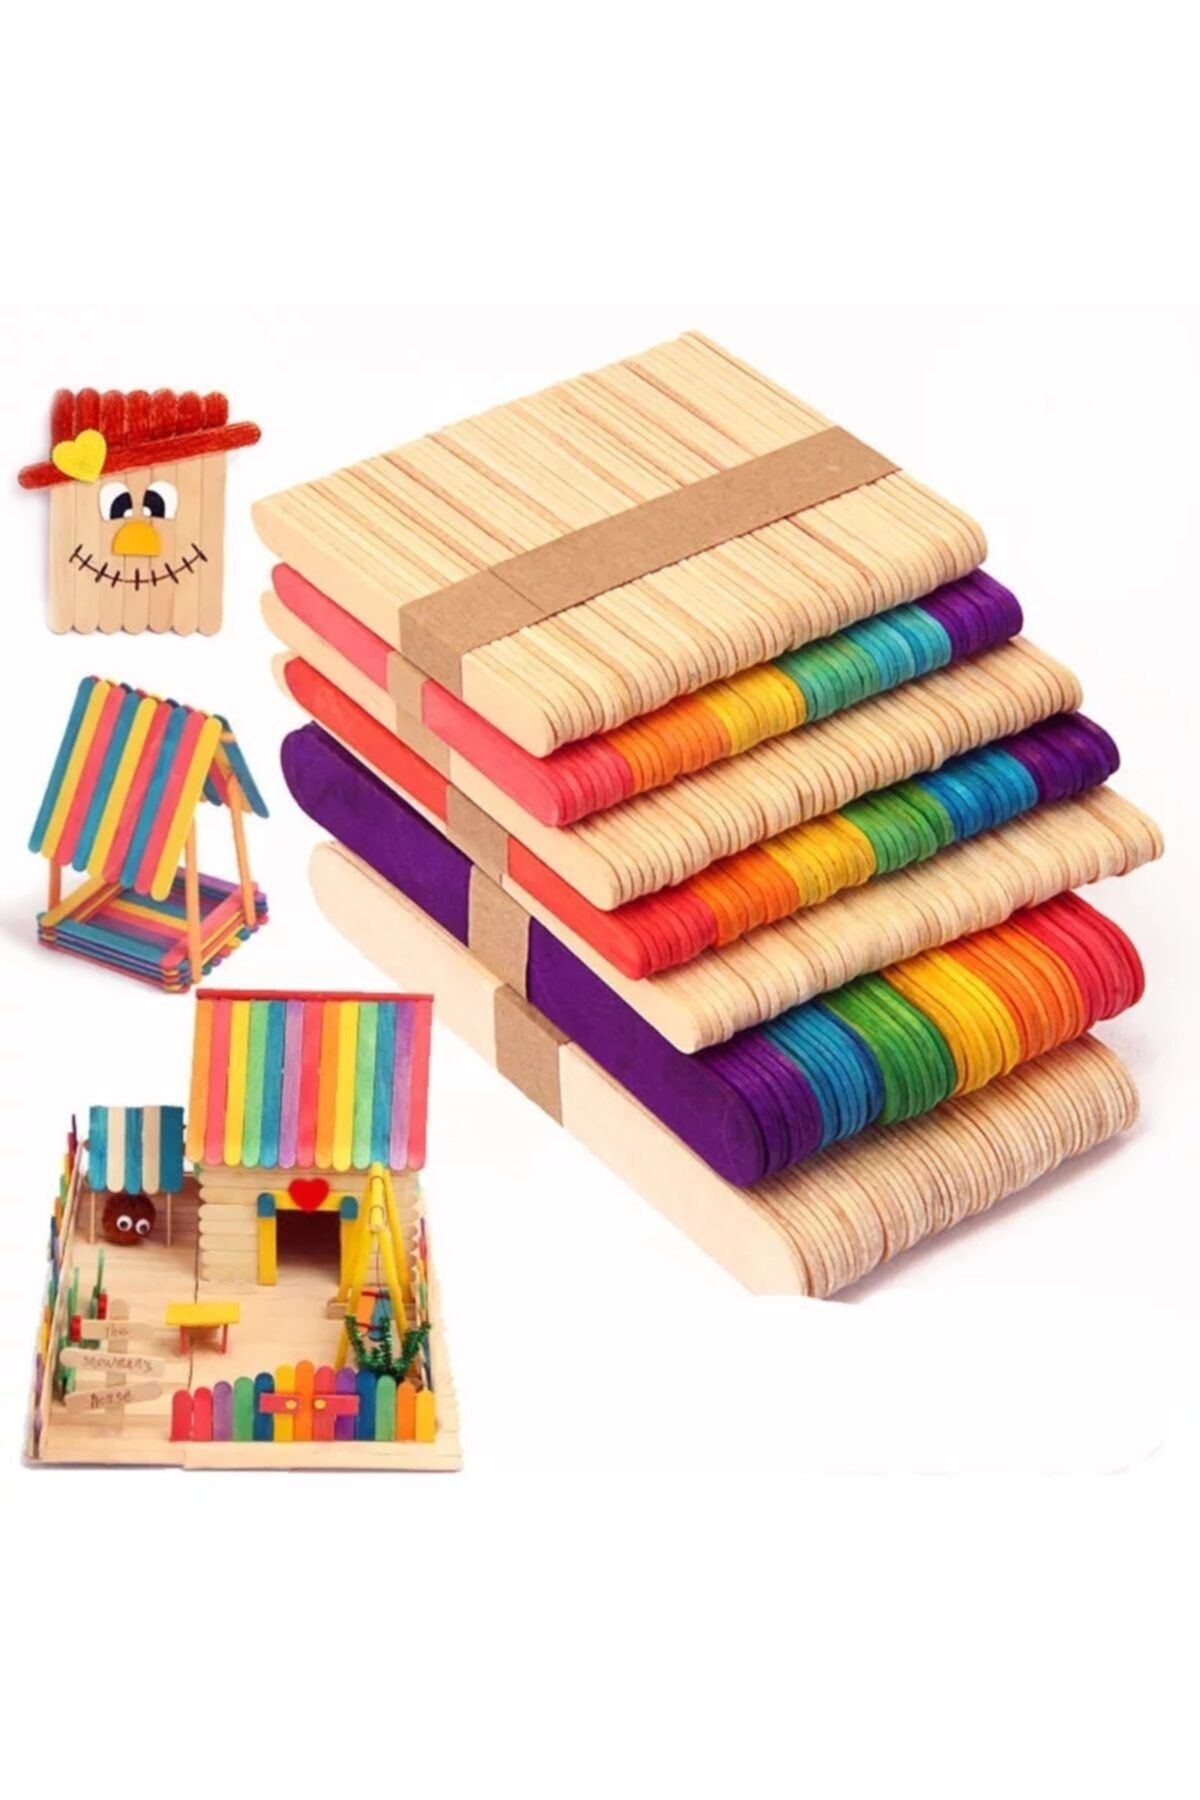 RenkliKırtasiye Ahşap Çubuk Seti - Abeslang Seti - Montessori Etkinlik Materyalleri 288 Adet